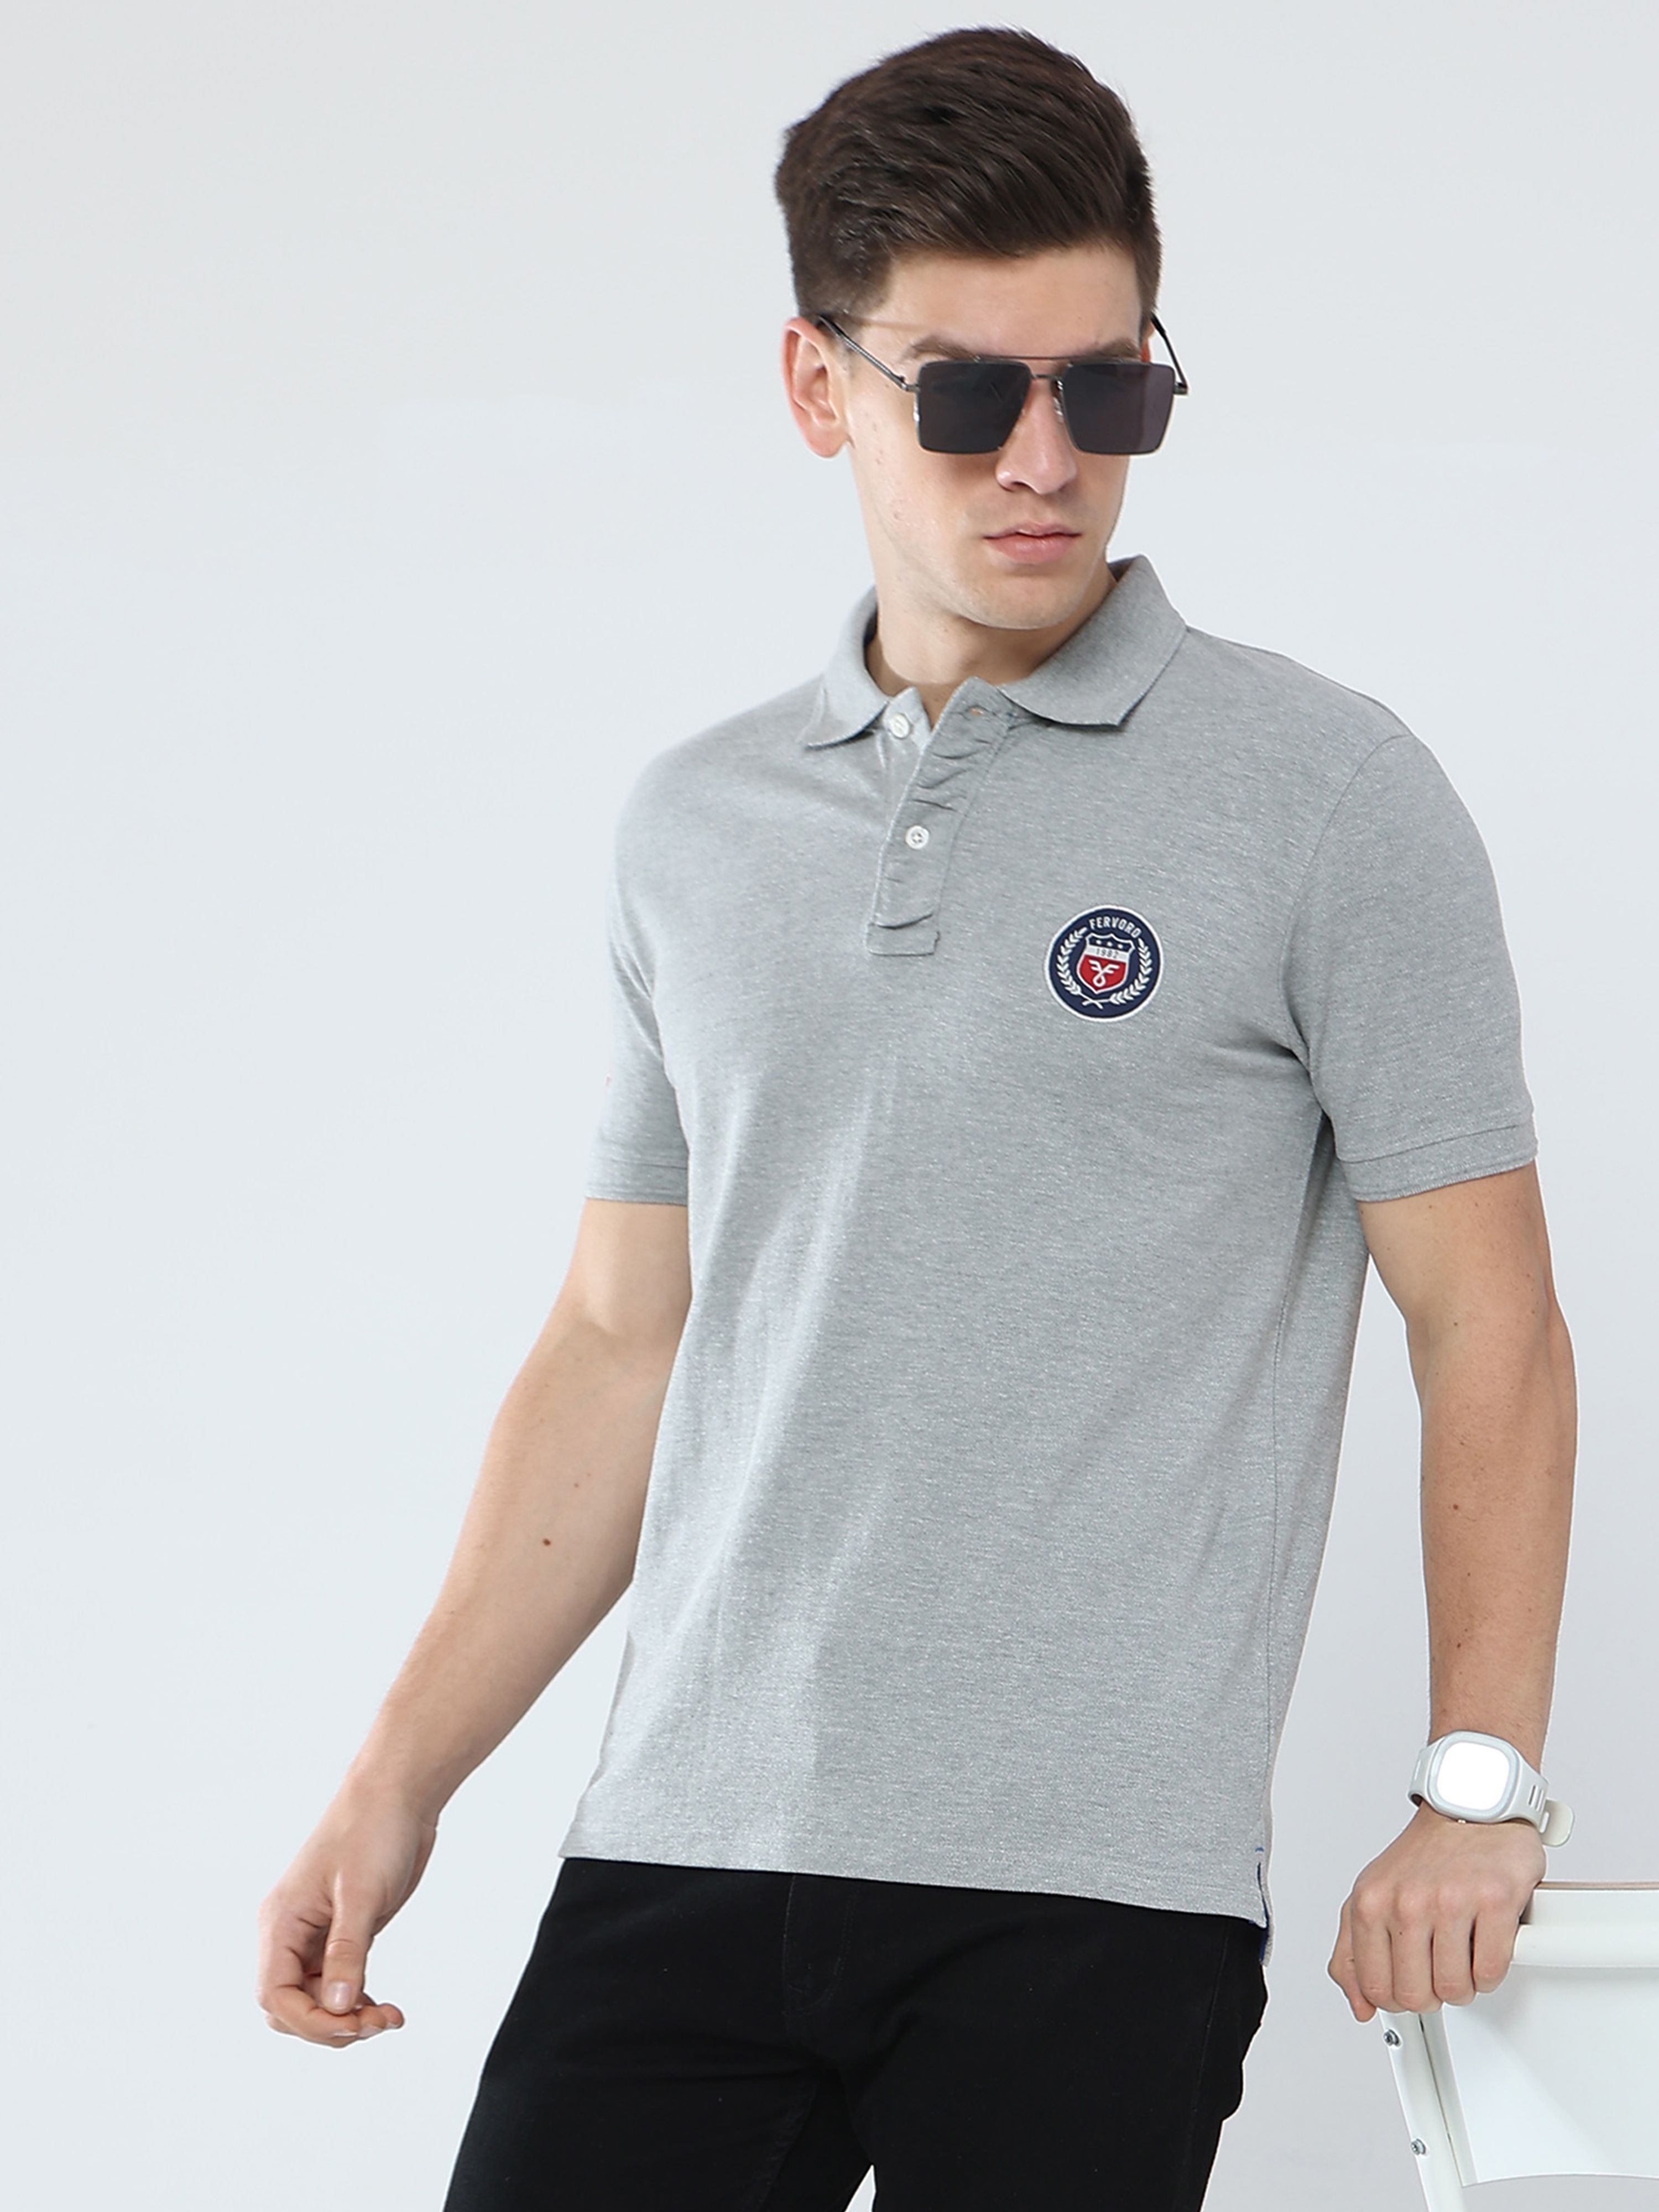     			FERVORO Cotton Blend Regular Fit Self Design Half Sleeves Men's Polo T Shirt - Grey ( Pack of 1 )